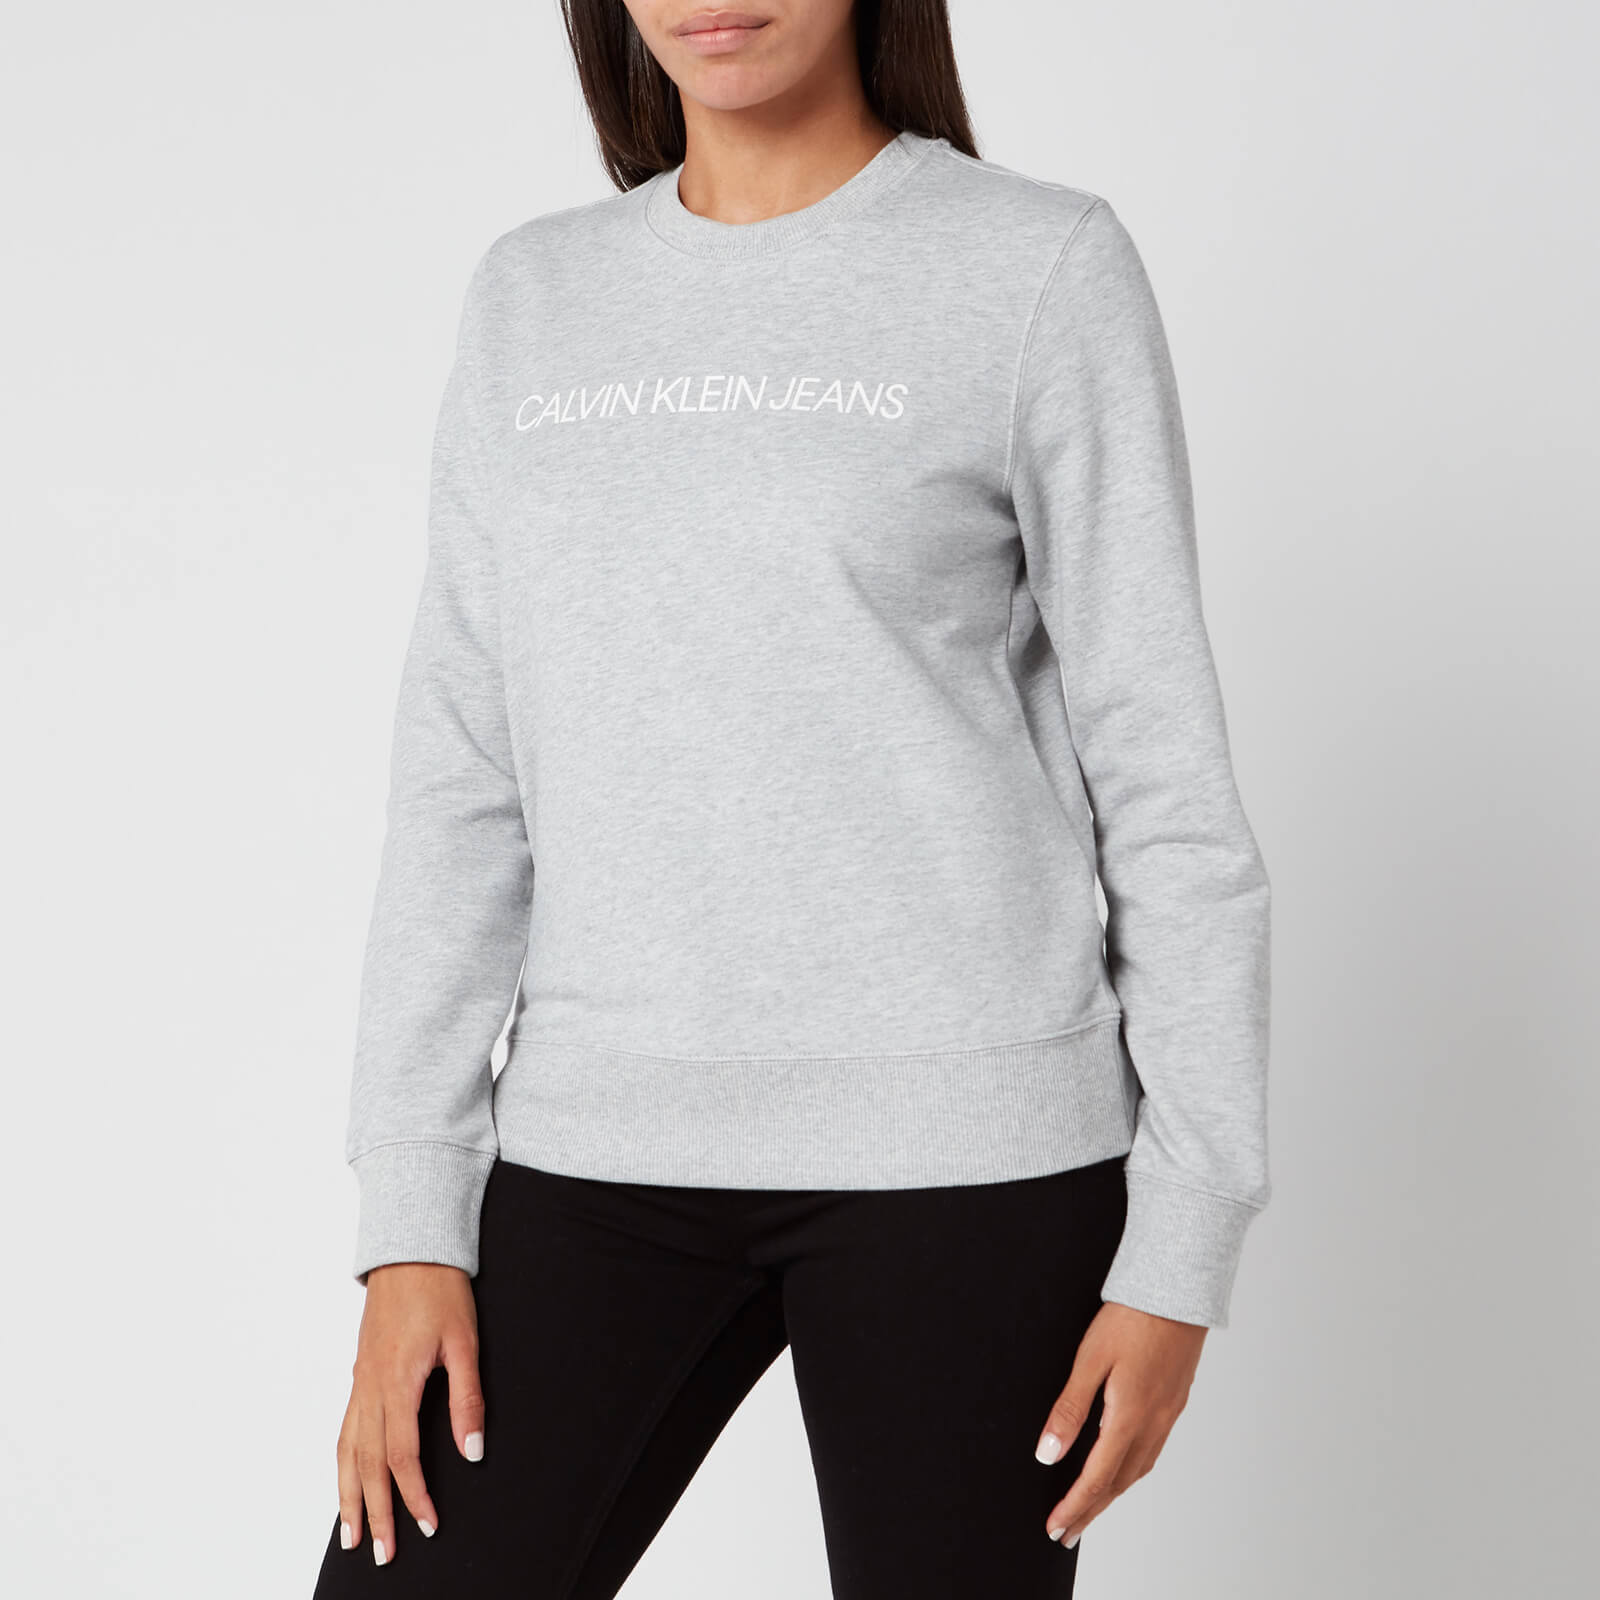 Calvin Klein Jeans Women's Institutional Core Logo Crew Neck Sweatshirt - Light Grey Heather - L